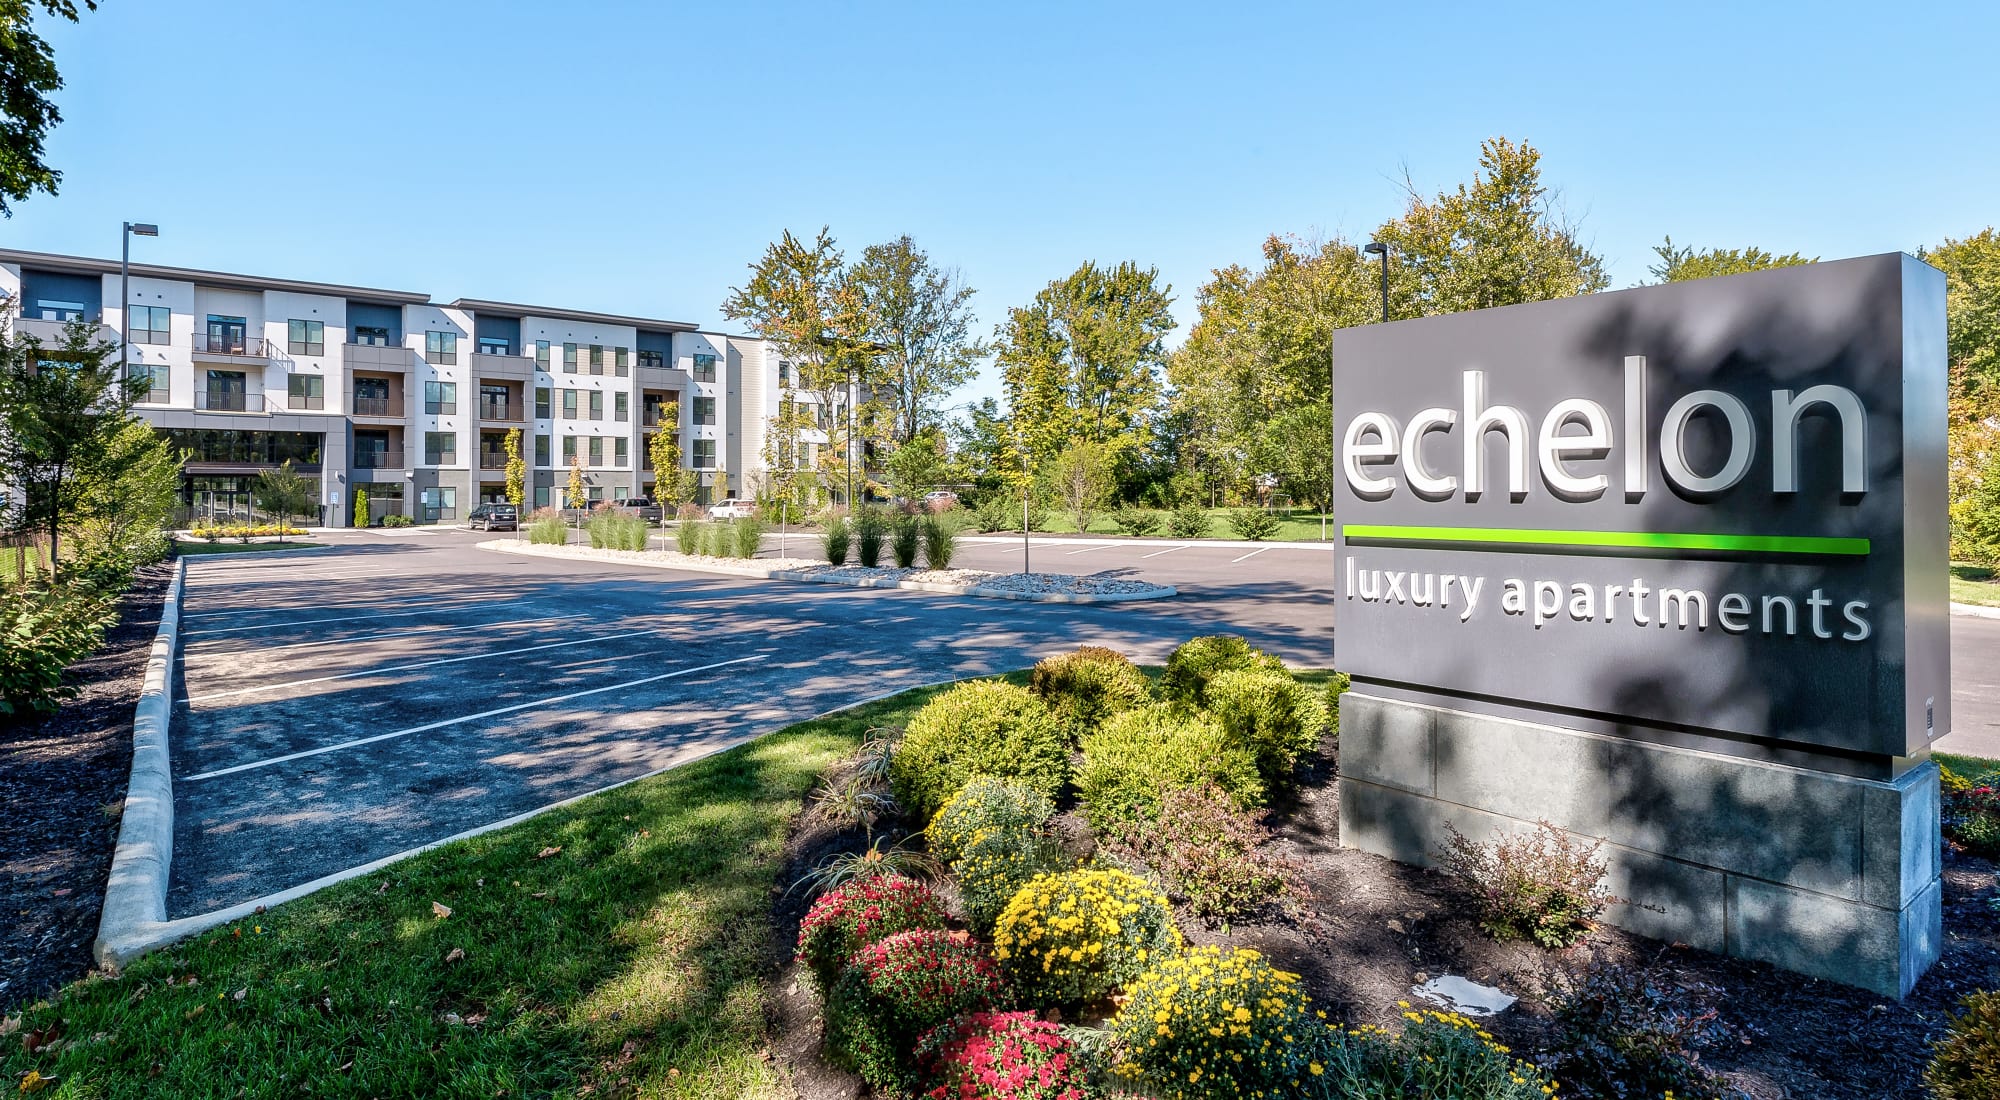 Map + Directions | Echelon Luxury Apartments in Cincinnati, Ohio